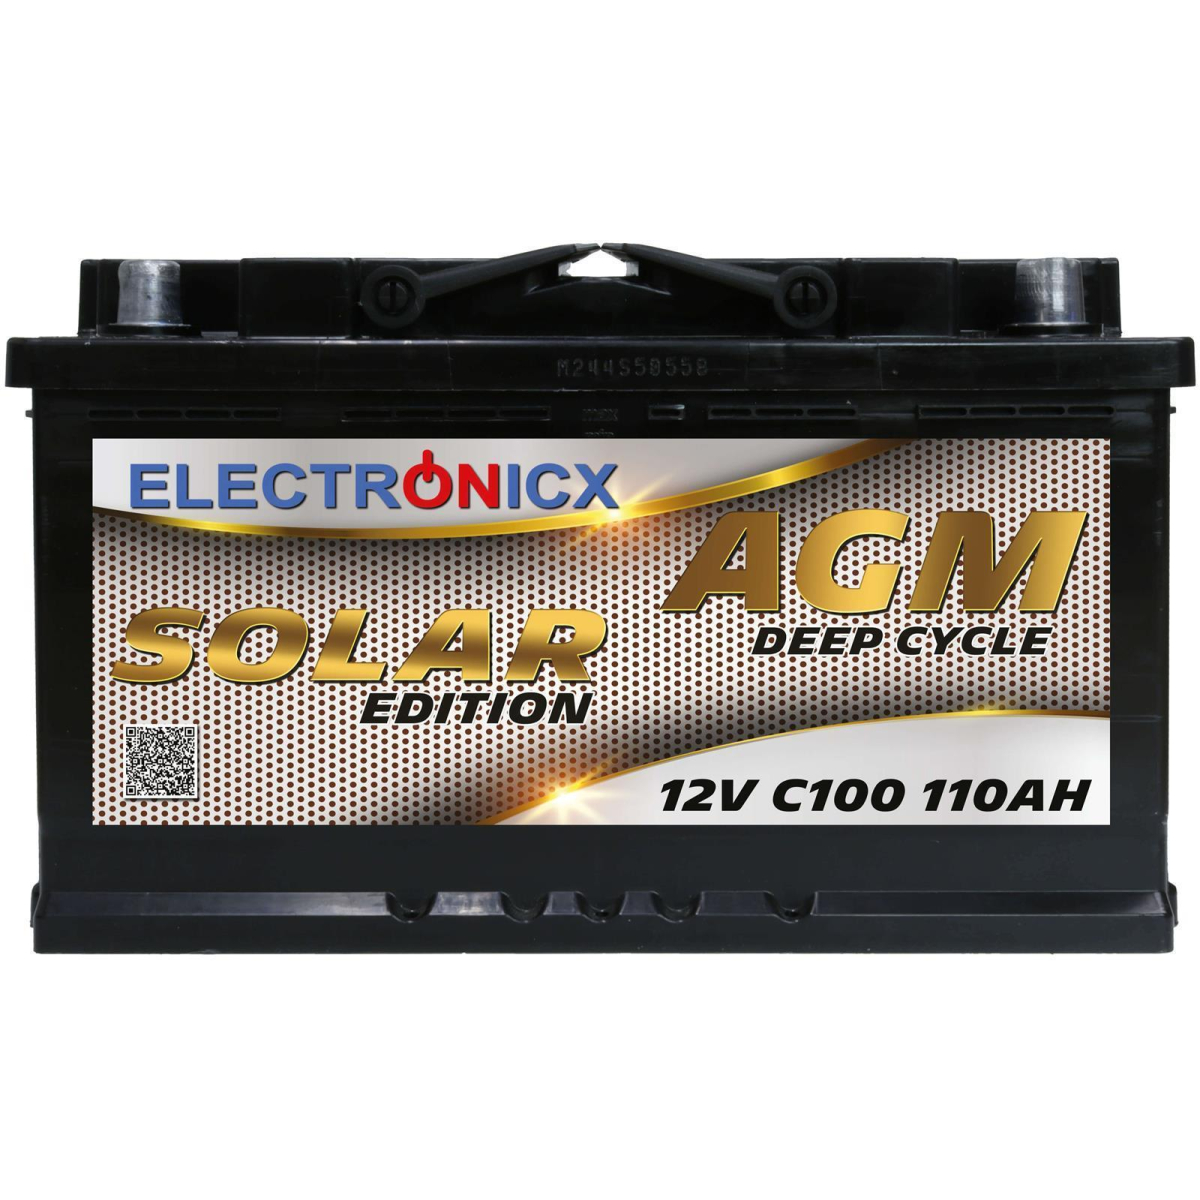 Solar battery 12v 110ah Electronicx Solar Edition agm battery solar battery supply battery power storage photovoltaic camping solar system gardenh